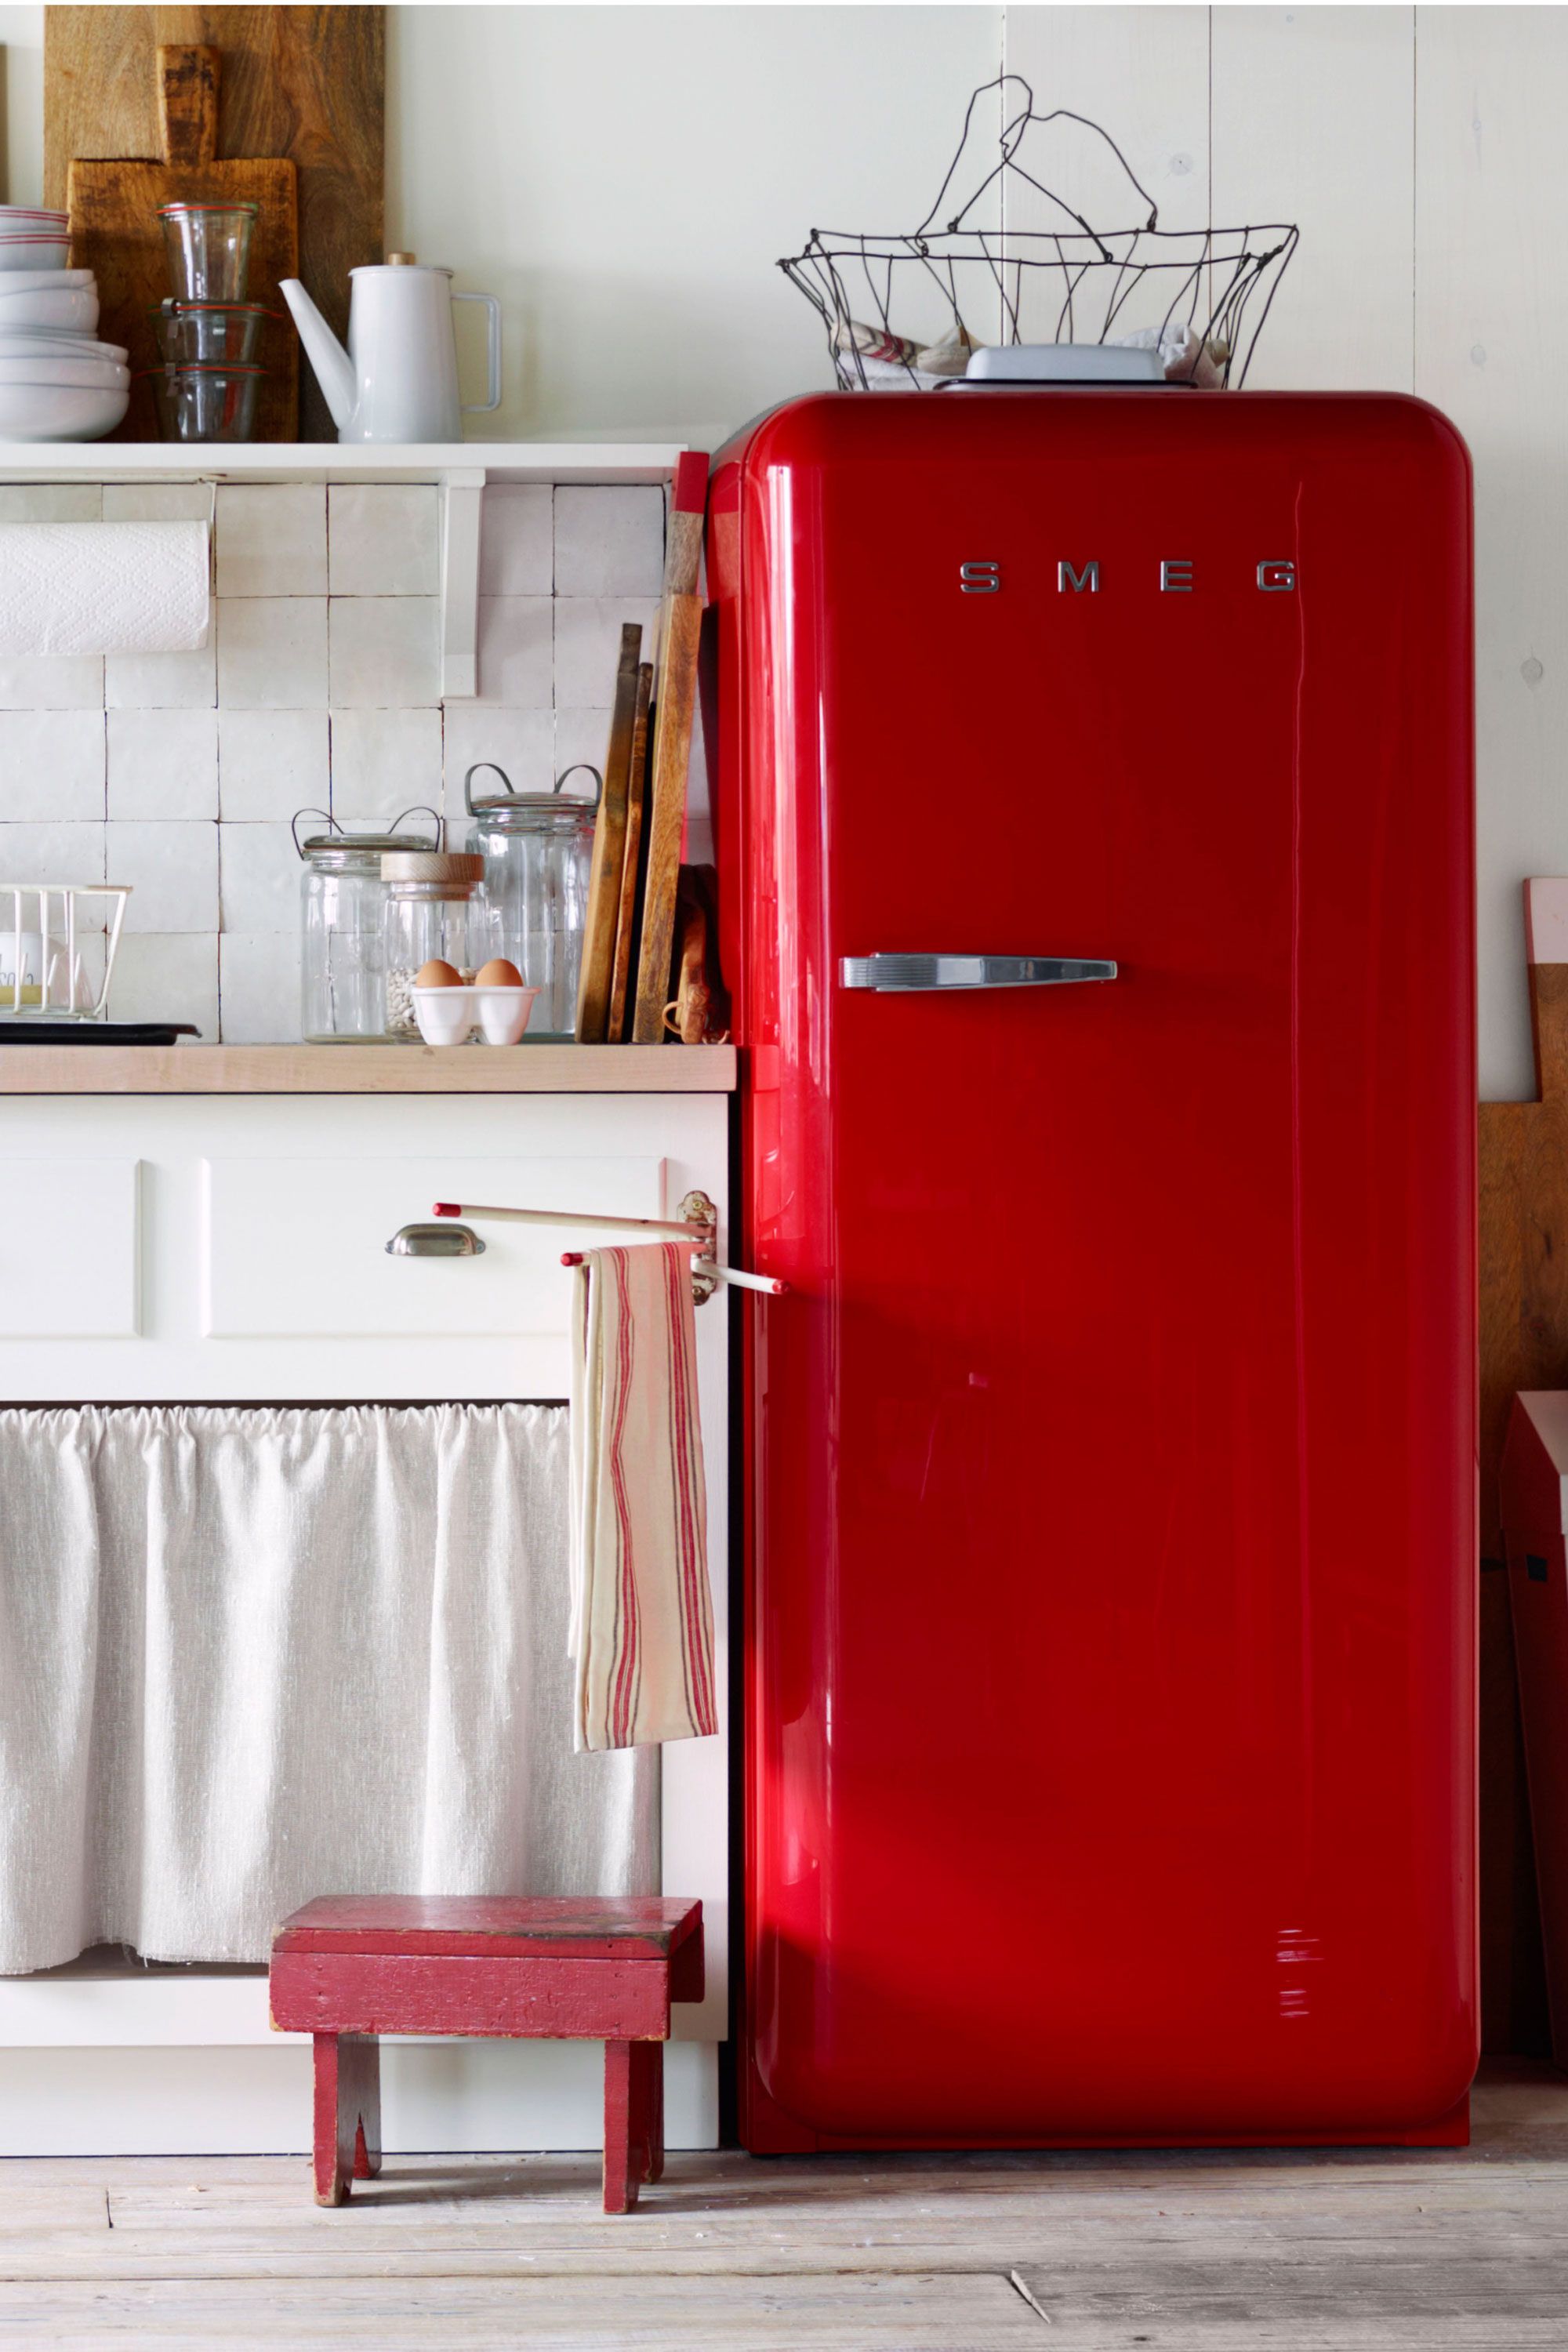 12 Retro Diner Decor Ideas for Your Kitchen - Vintage Kitchen Decor